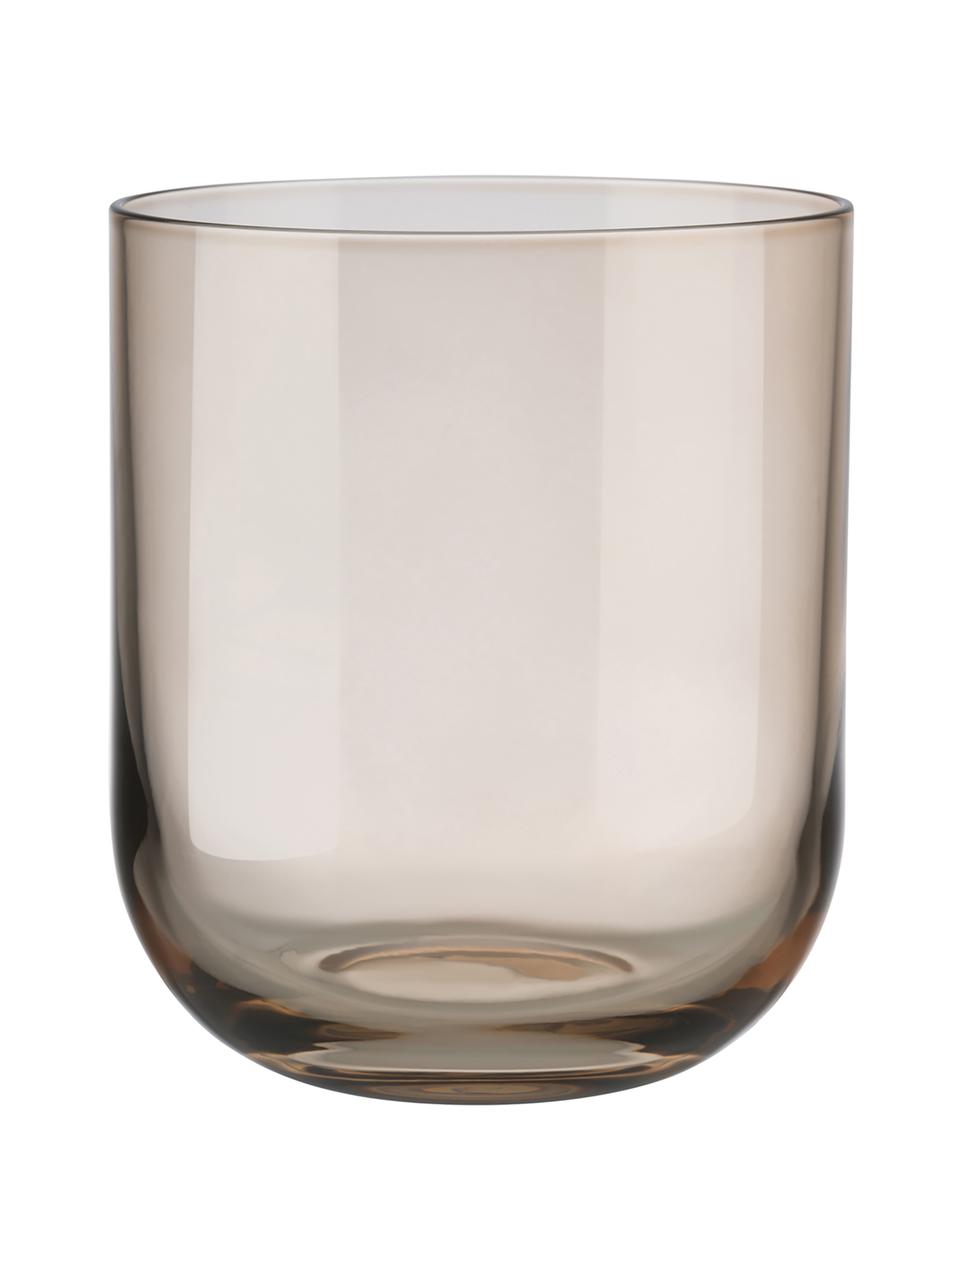 Waterglazen Fuum in bruin, 4 stuks, Glas, Beige, transparant, Ø 8 x H 9 cm, 300 ml